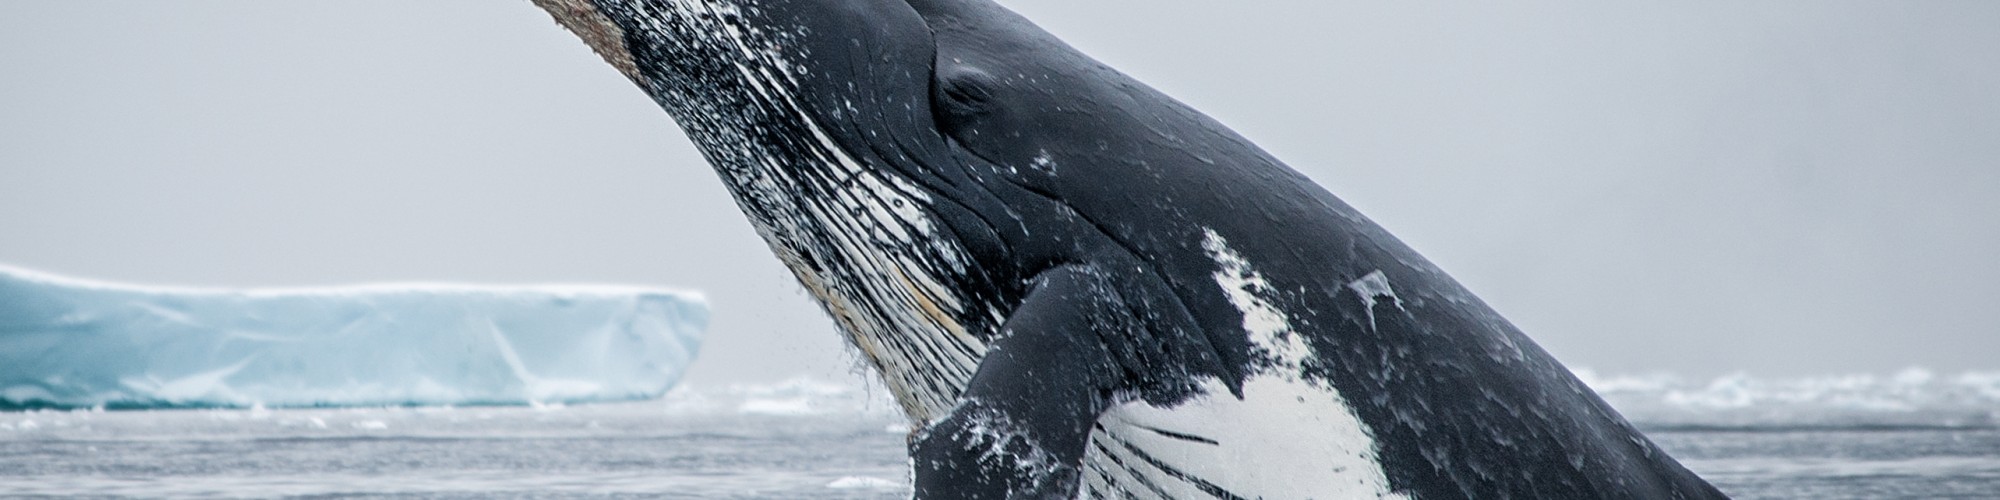 Antarctica - Gen - Boreal - Whale by Lorraine Tucri